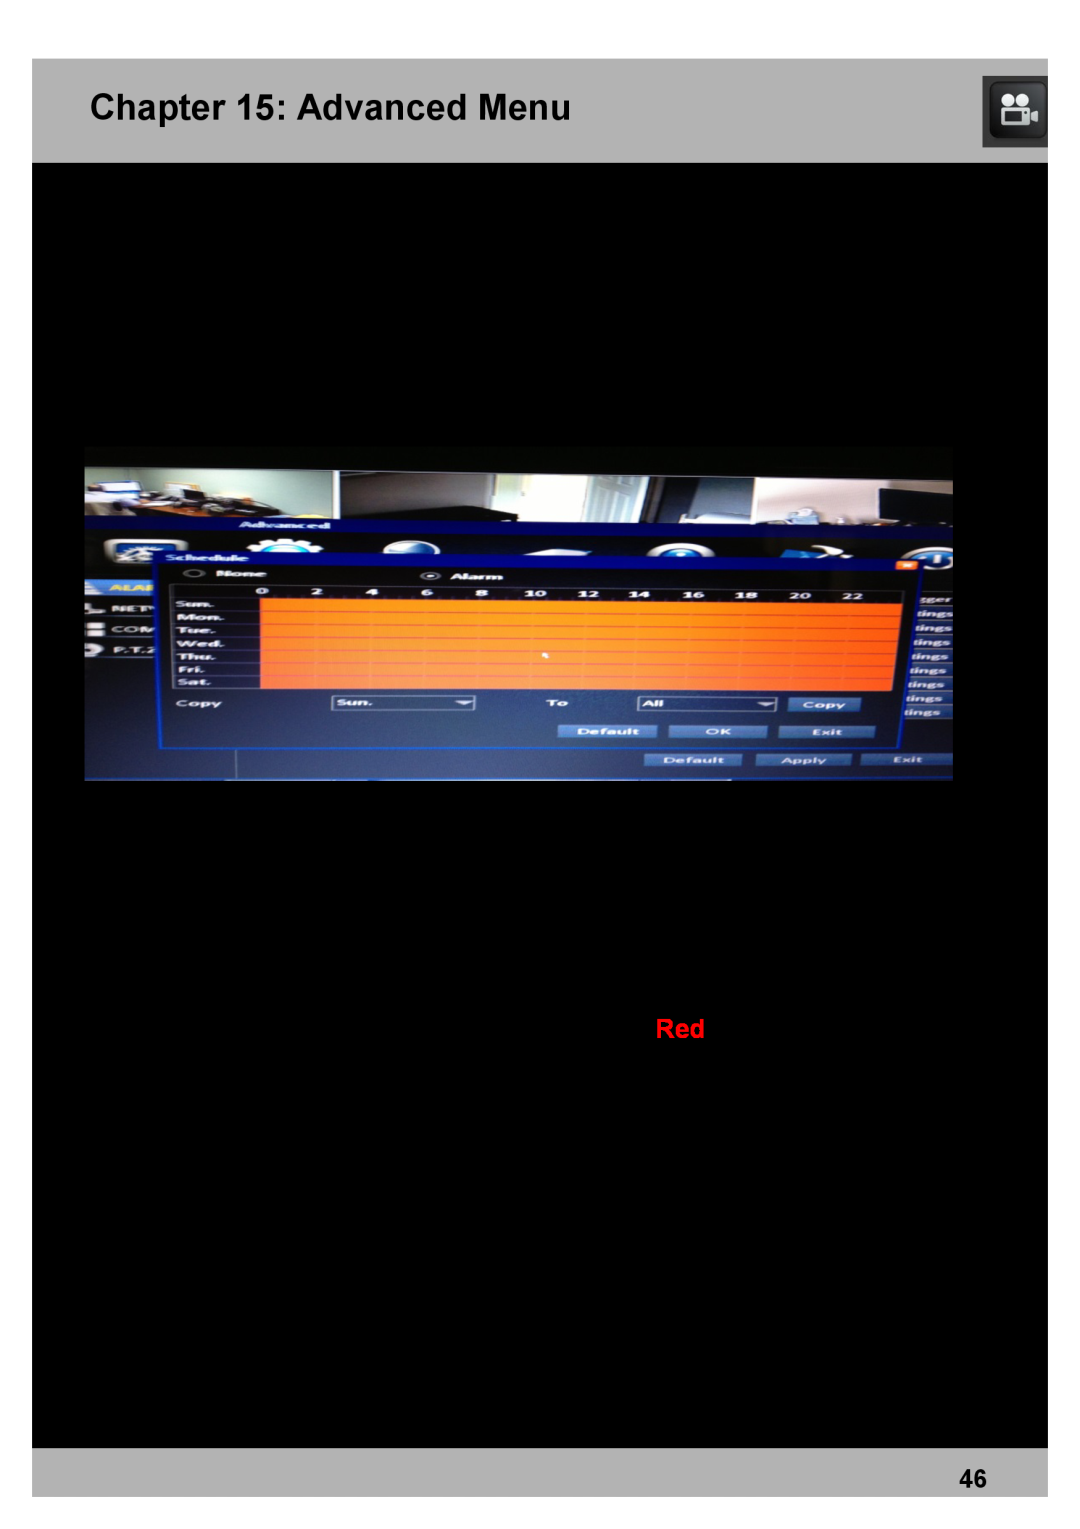 Night Owl Optics Elite Series 8CH, DVR Security Kit, PRO Series 8CH manual Schedule Screen, •Recording types, Advanced Menu 